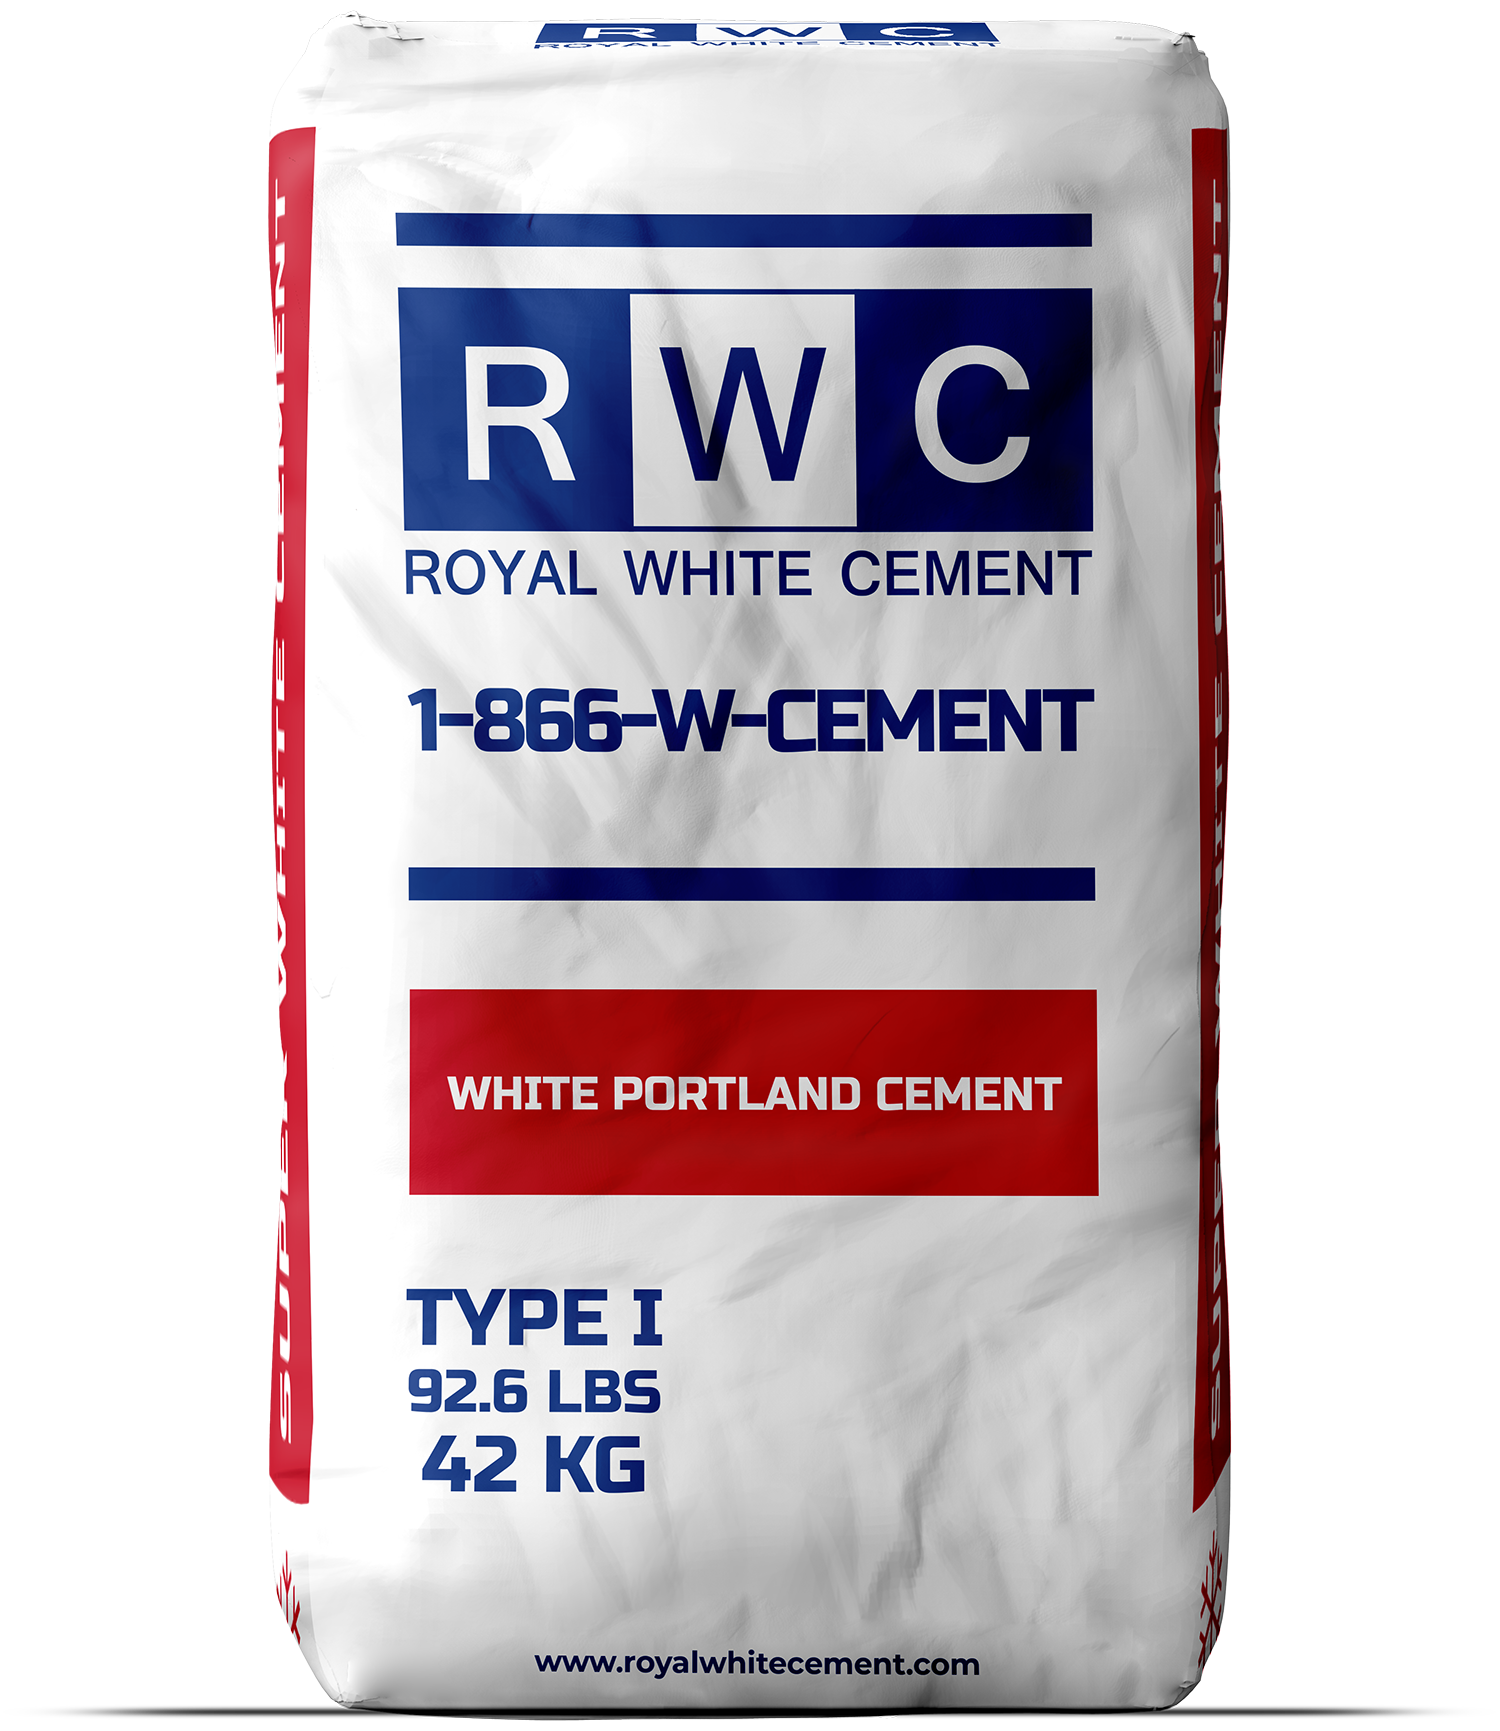 Royal White Cement - White Portland Cement